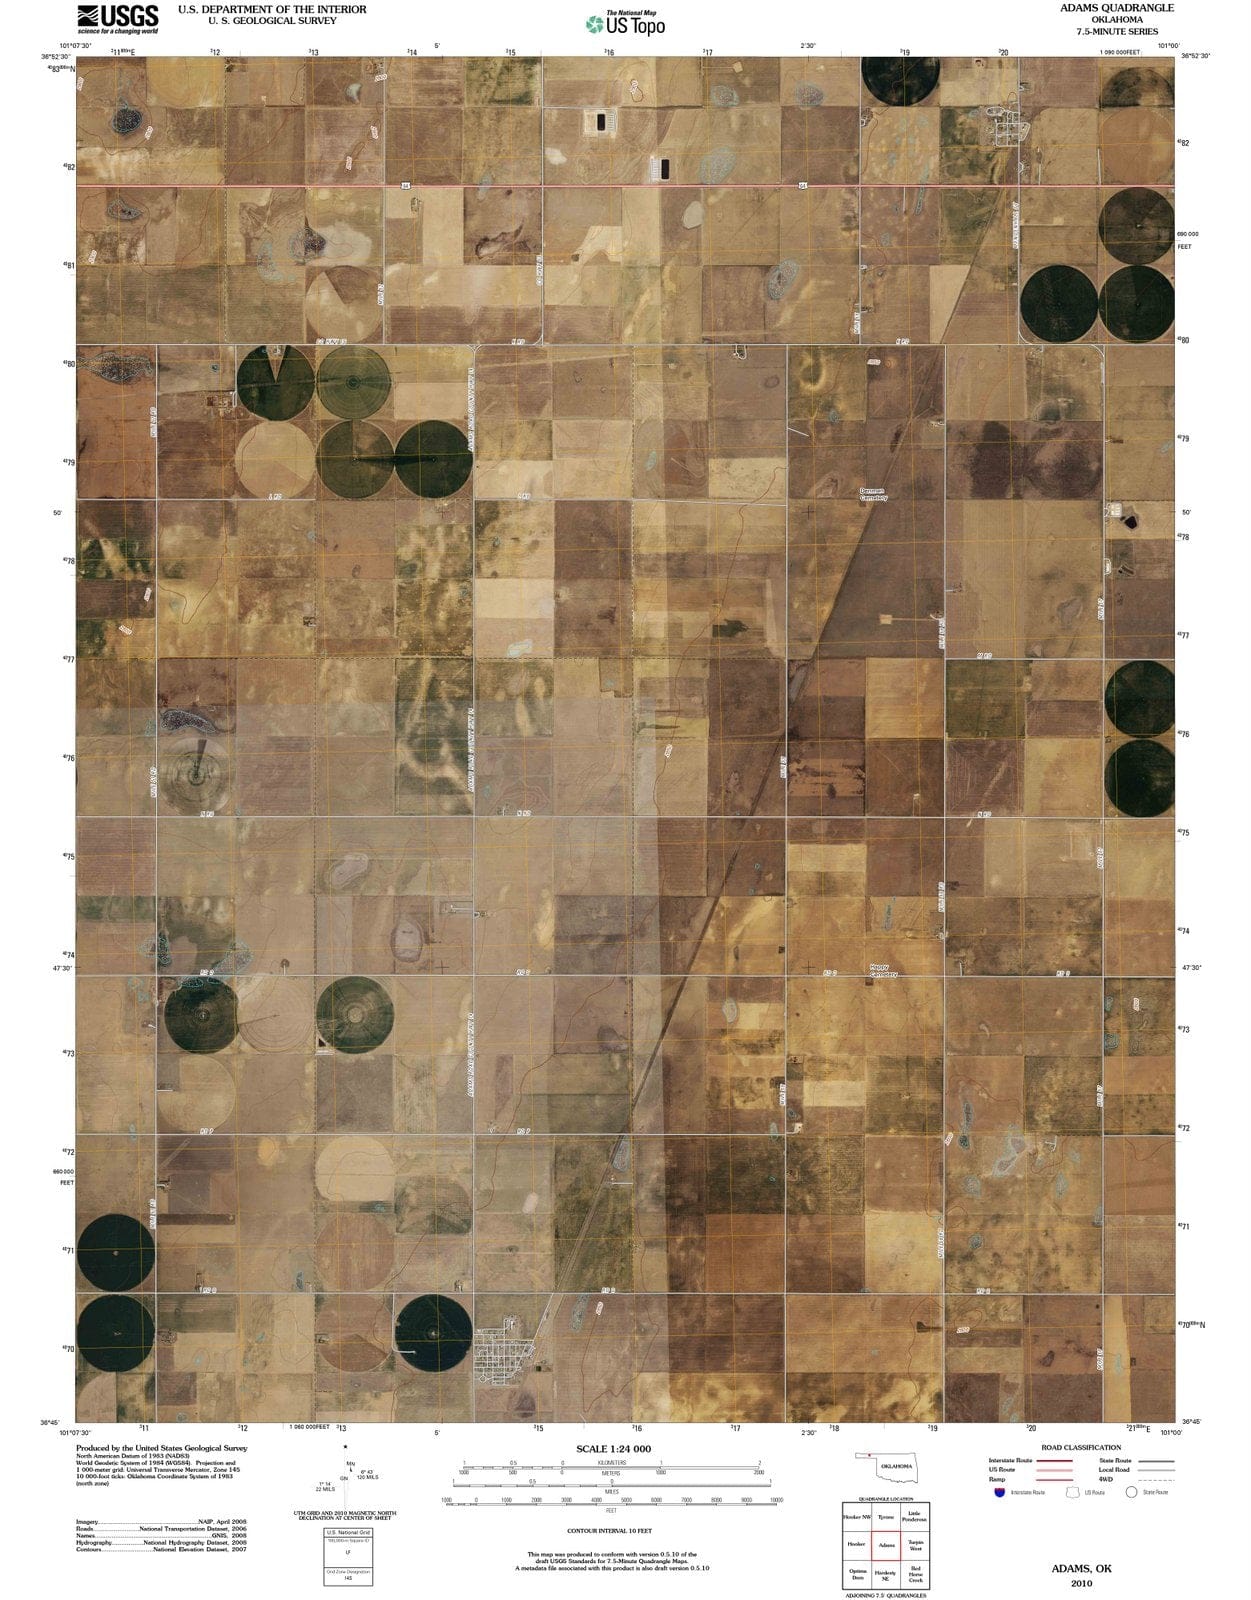 2010 Adams, OK - Oklahoma - USGS Topographic Map